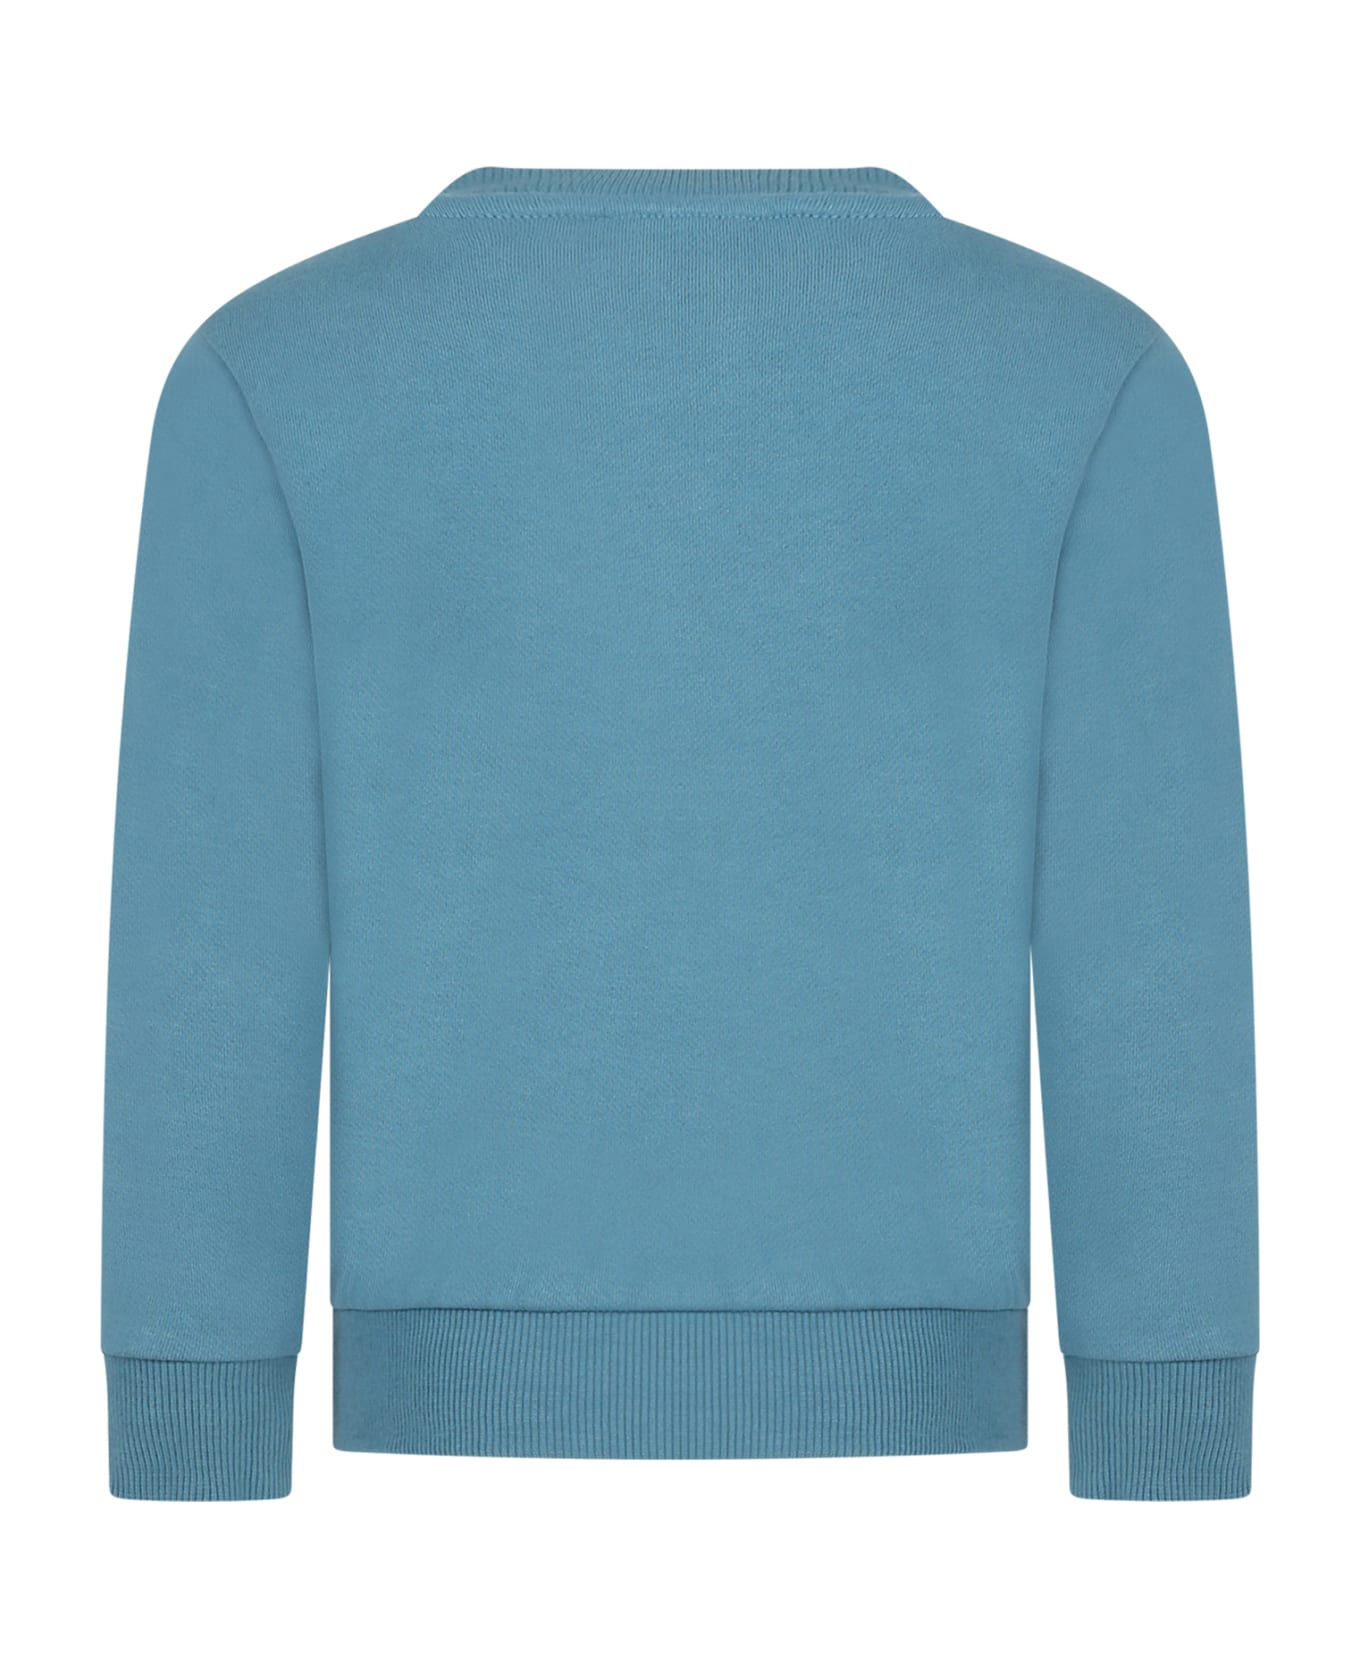 Timberland Light Blue Sweatshirt For Boy With Print Logo - Light Blue